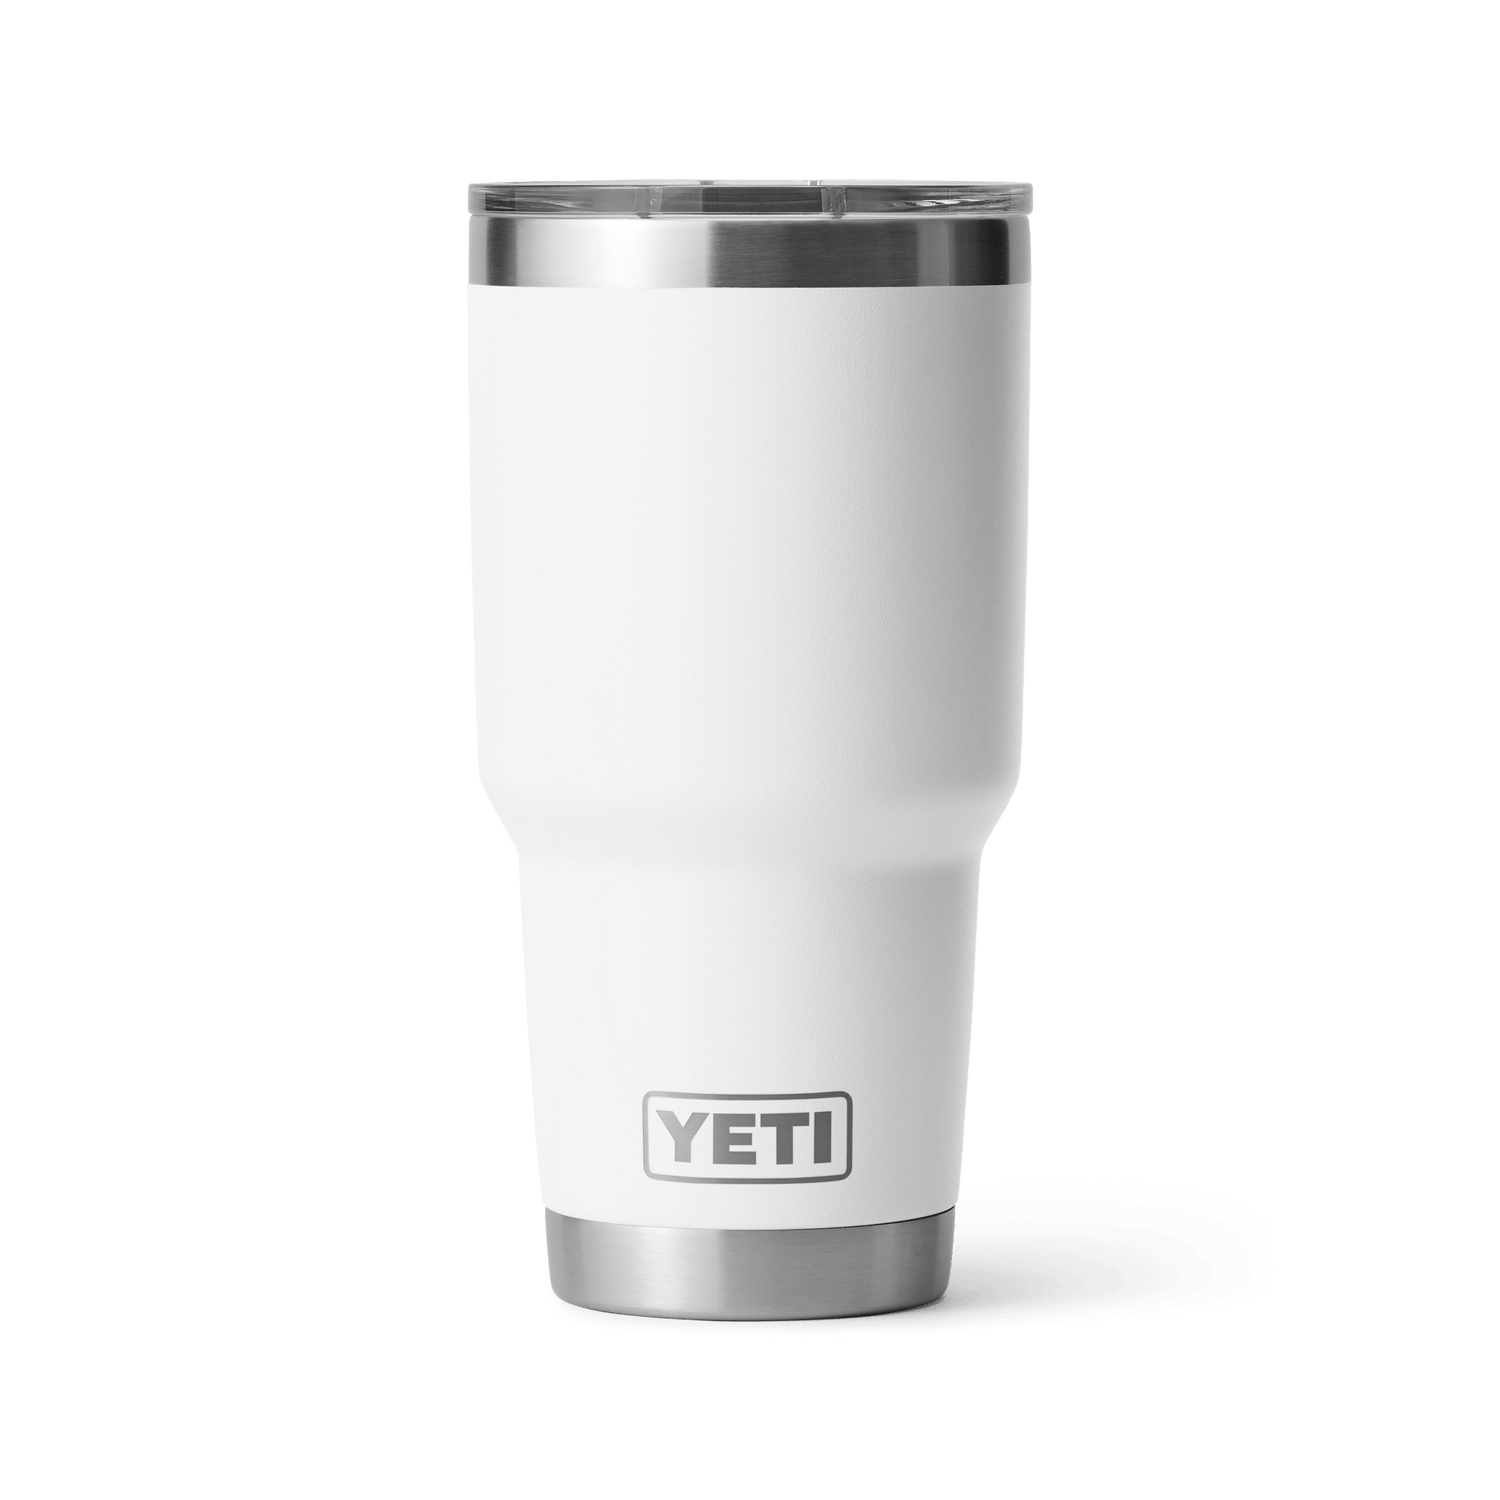 YETI Rambler Drinkware: Bottles, Mugs, Jugs, And More – YETI EUROPE